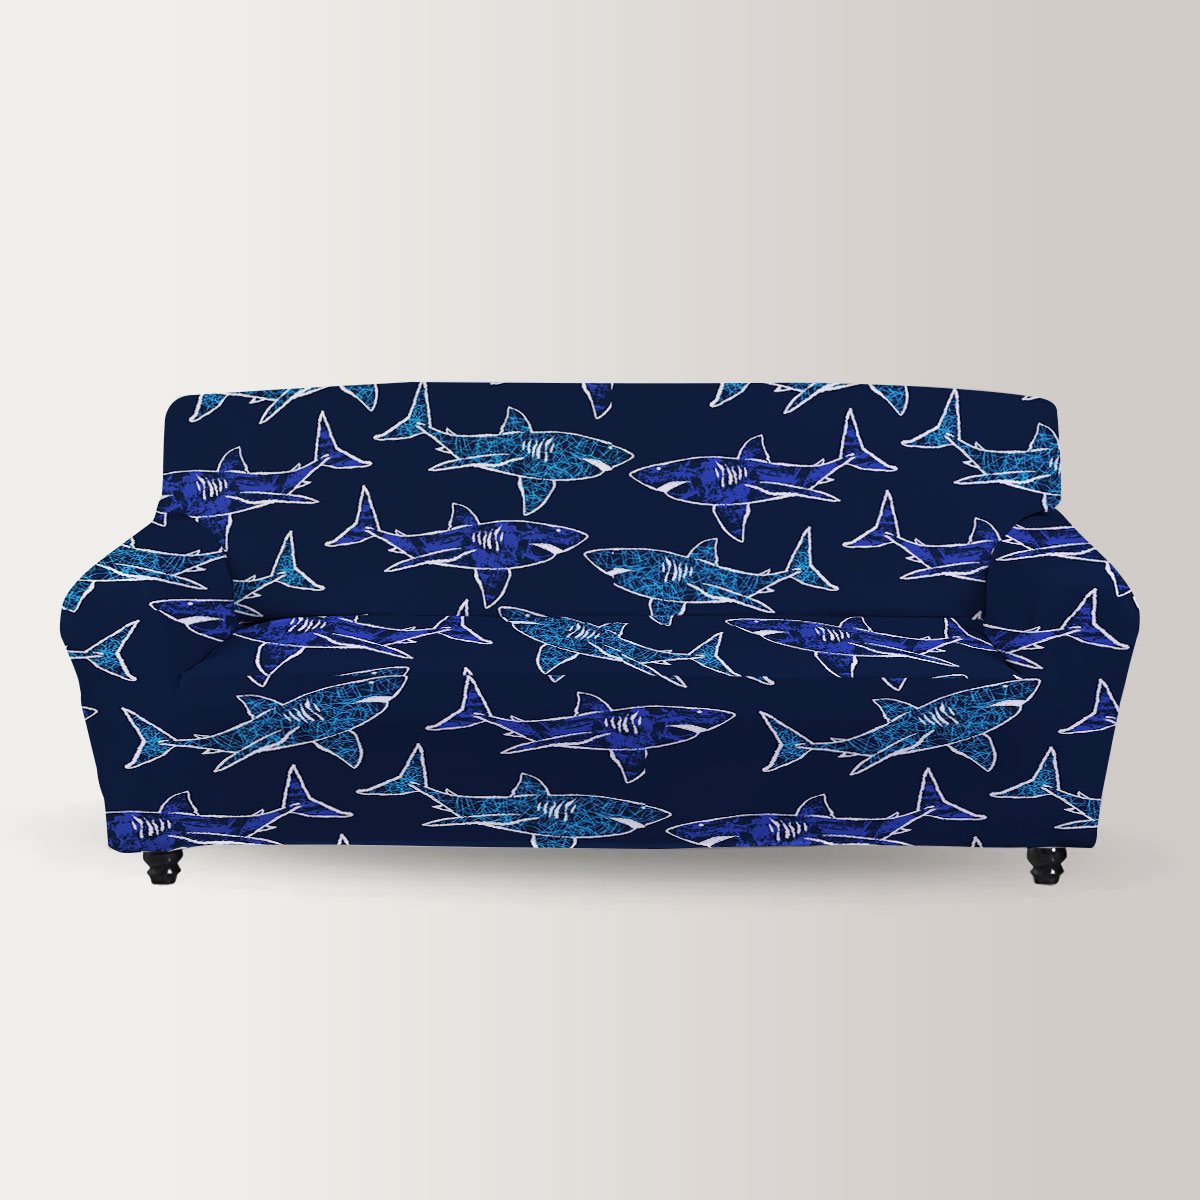 Dark Great White Shark Sofa Cover